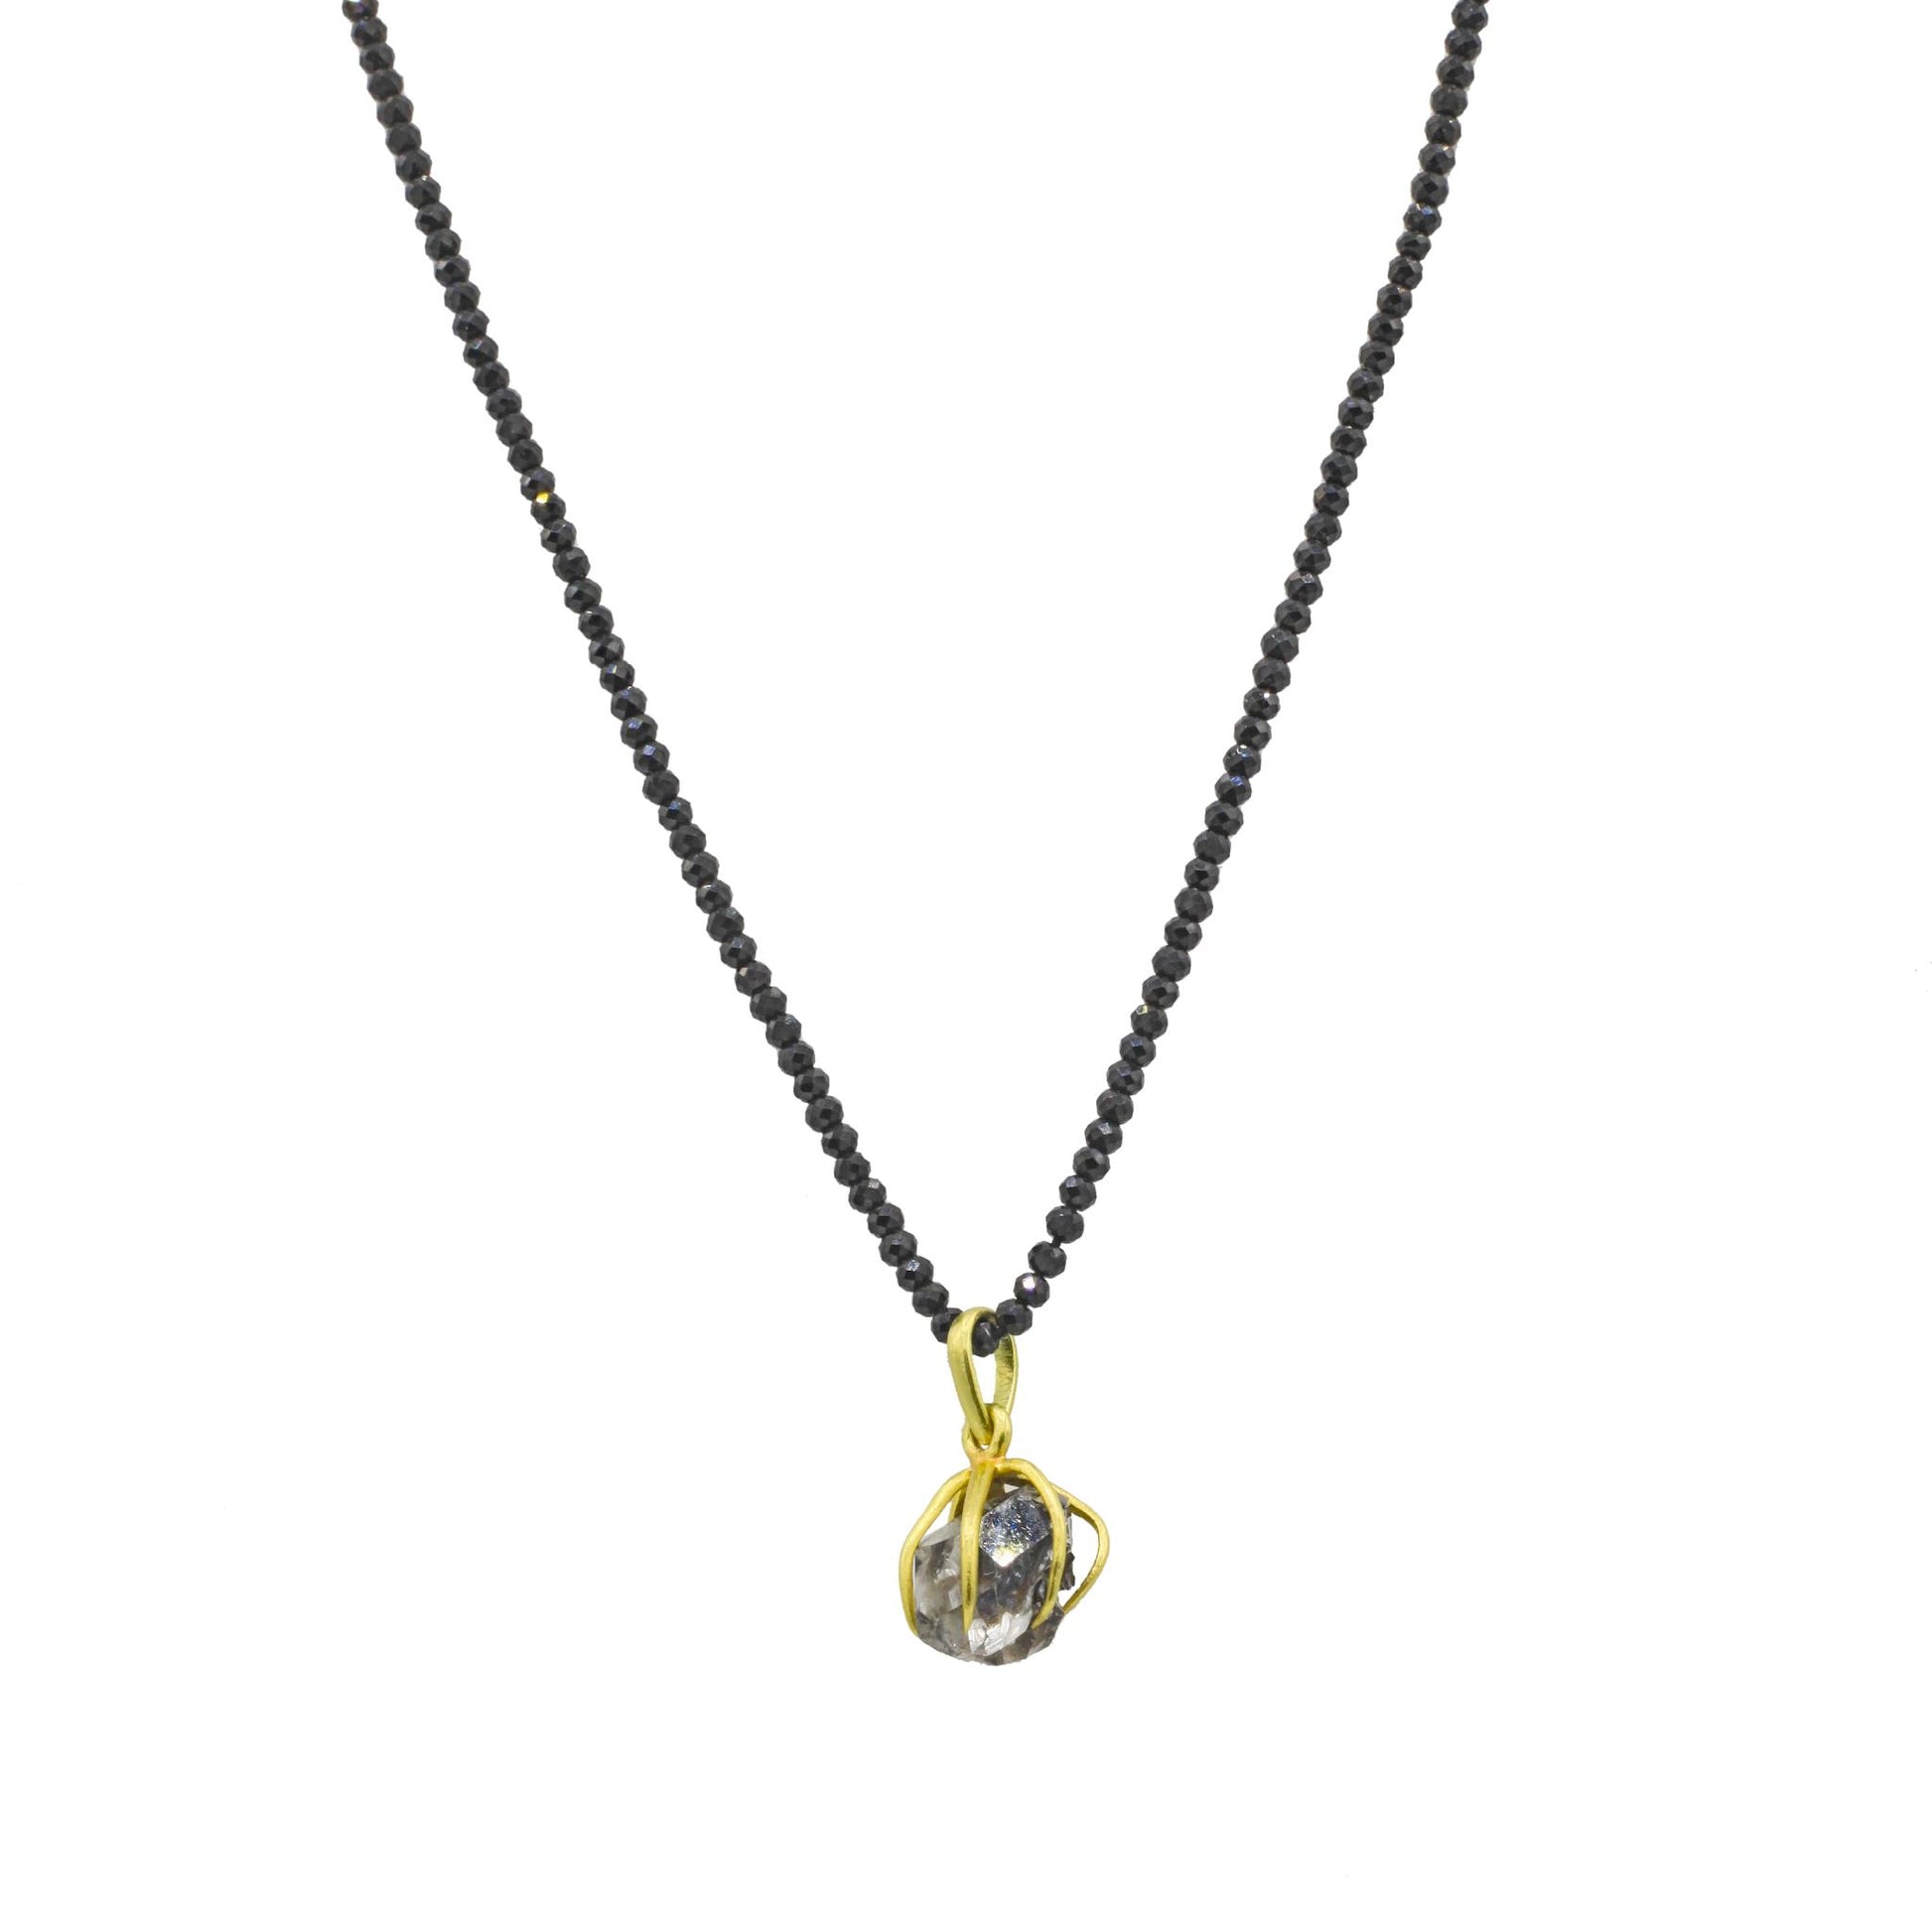 Lena Skadegard Jewels | Herkimer Diamond + Black Spinel 9k Gold Clasp Necklace | Firecracker